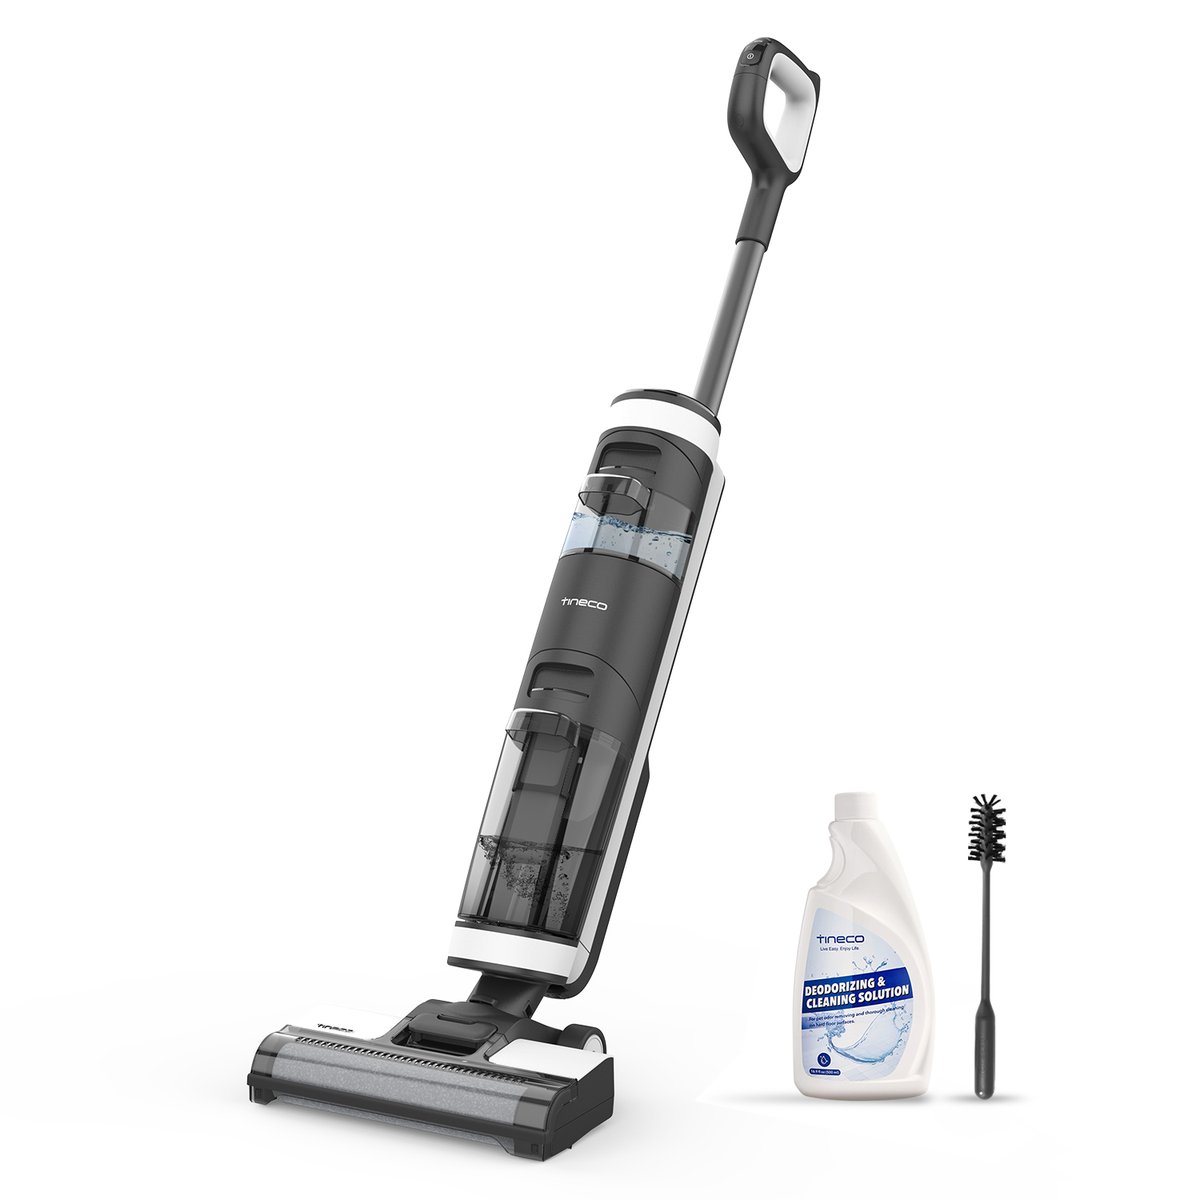 Tineco FLOOR ONE S3 Cordless Smart Wet/Dry Vacuum Cleaner $252 w/ coupon